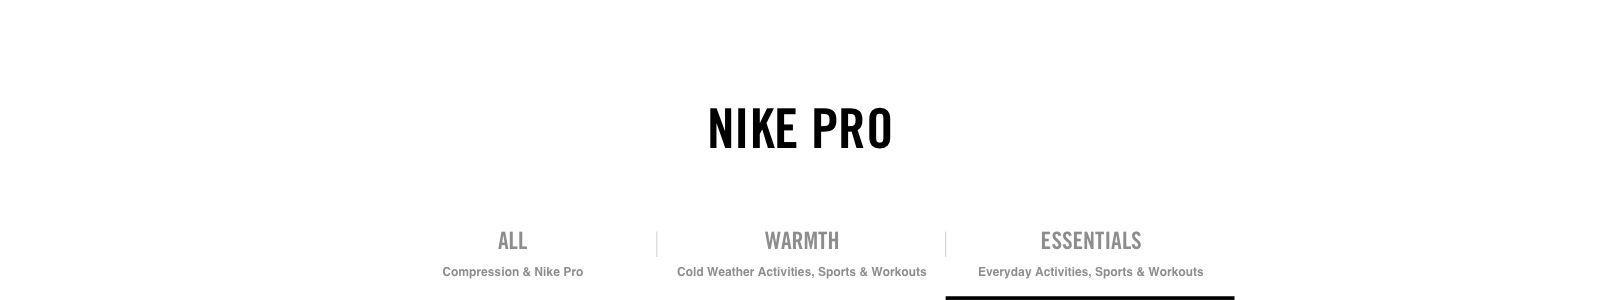 Nike.com Logo - Women's Core Compression & Nike Pro. Nike.com